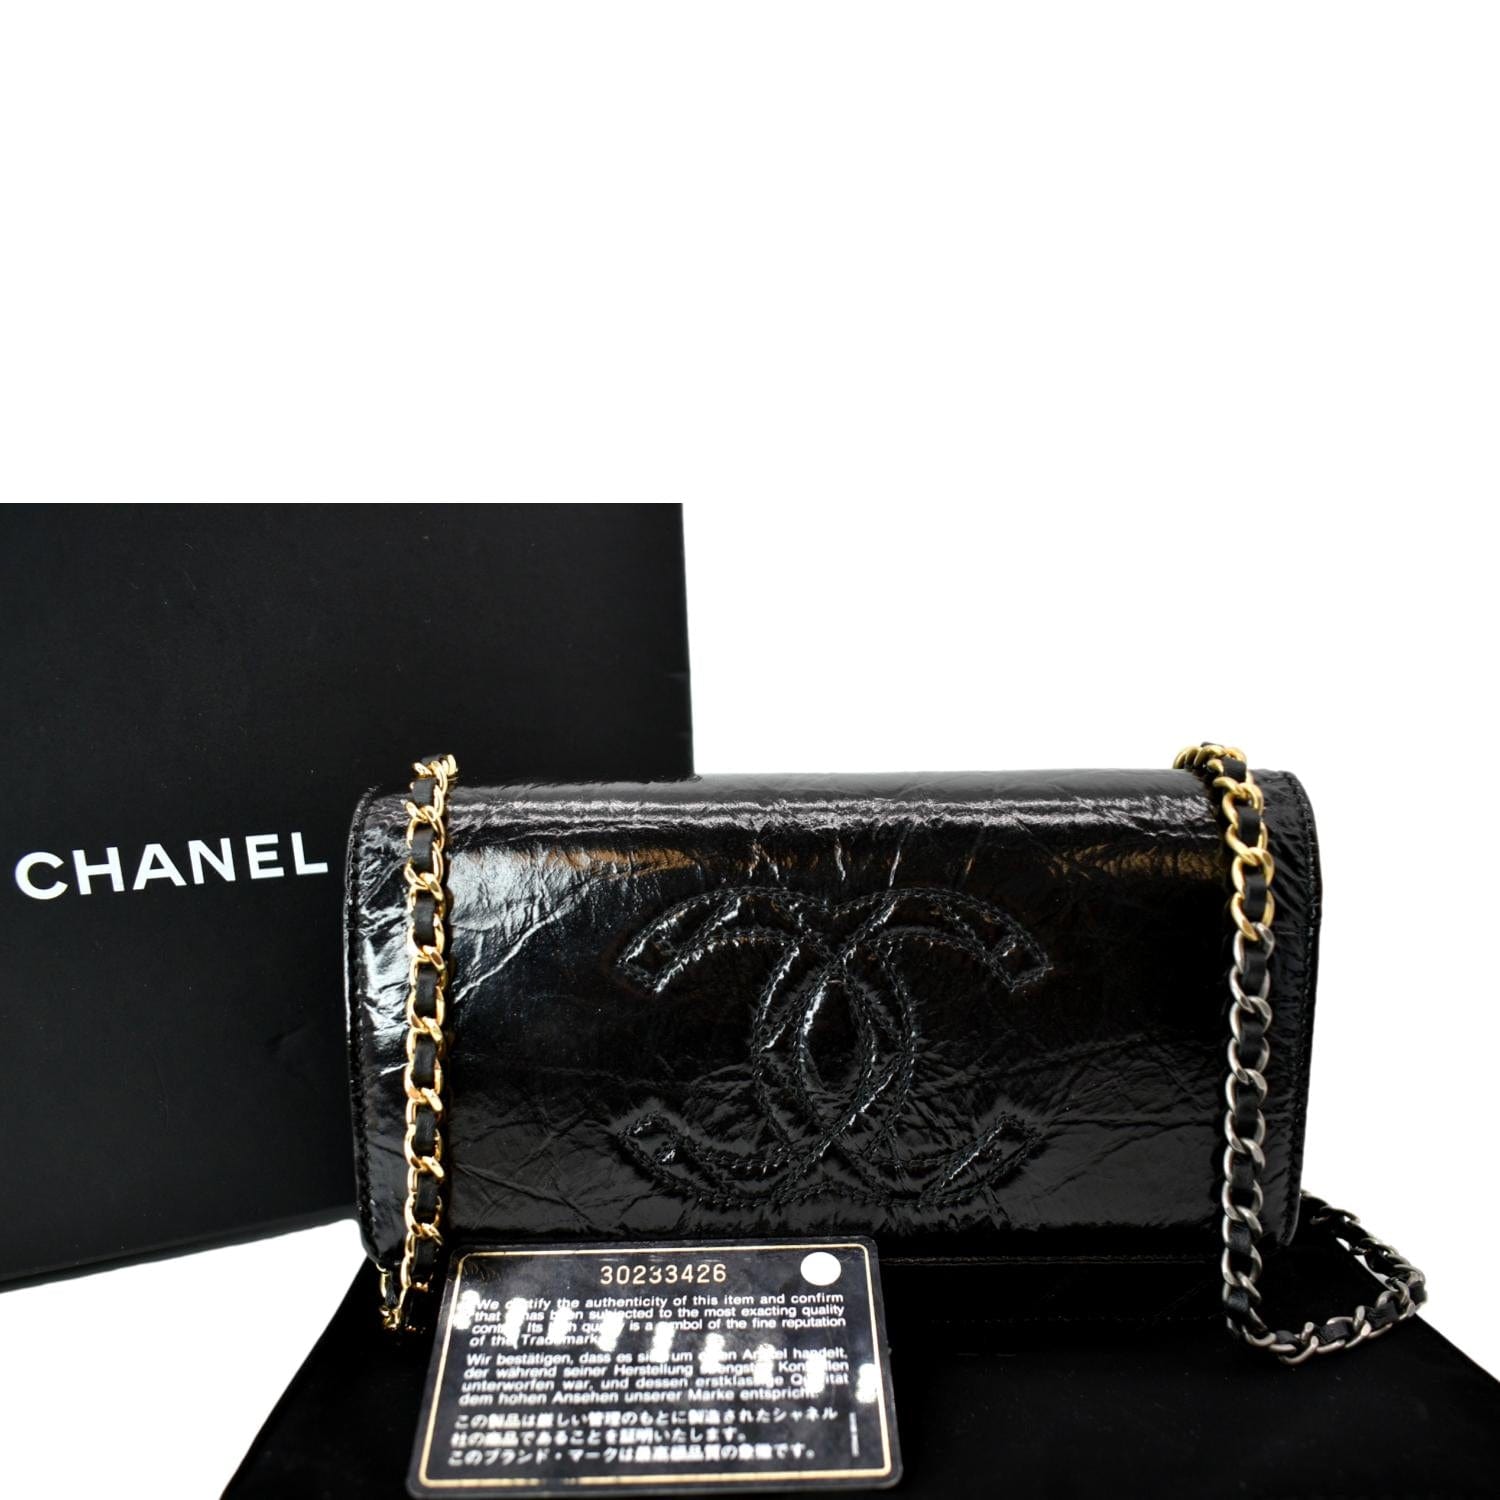 Chanel Black Interlocking CC Logo Patent Leather Compact Wallet